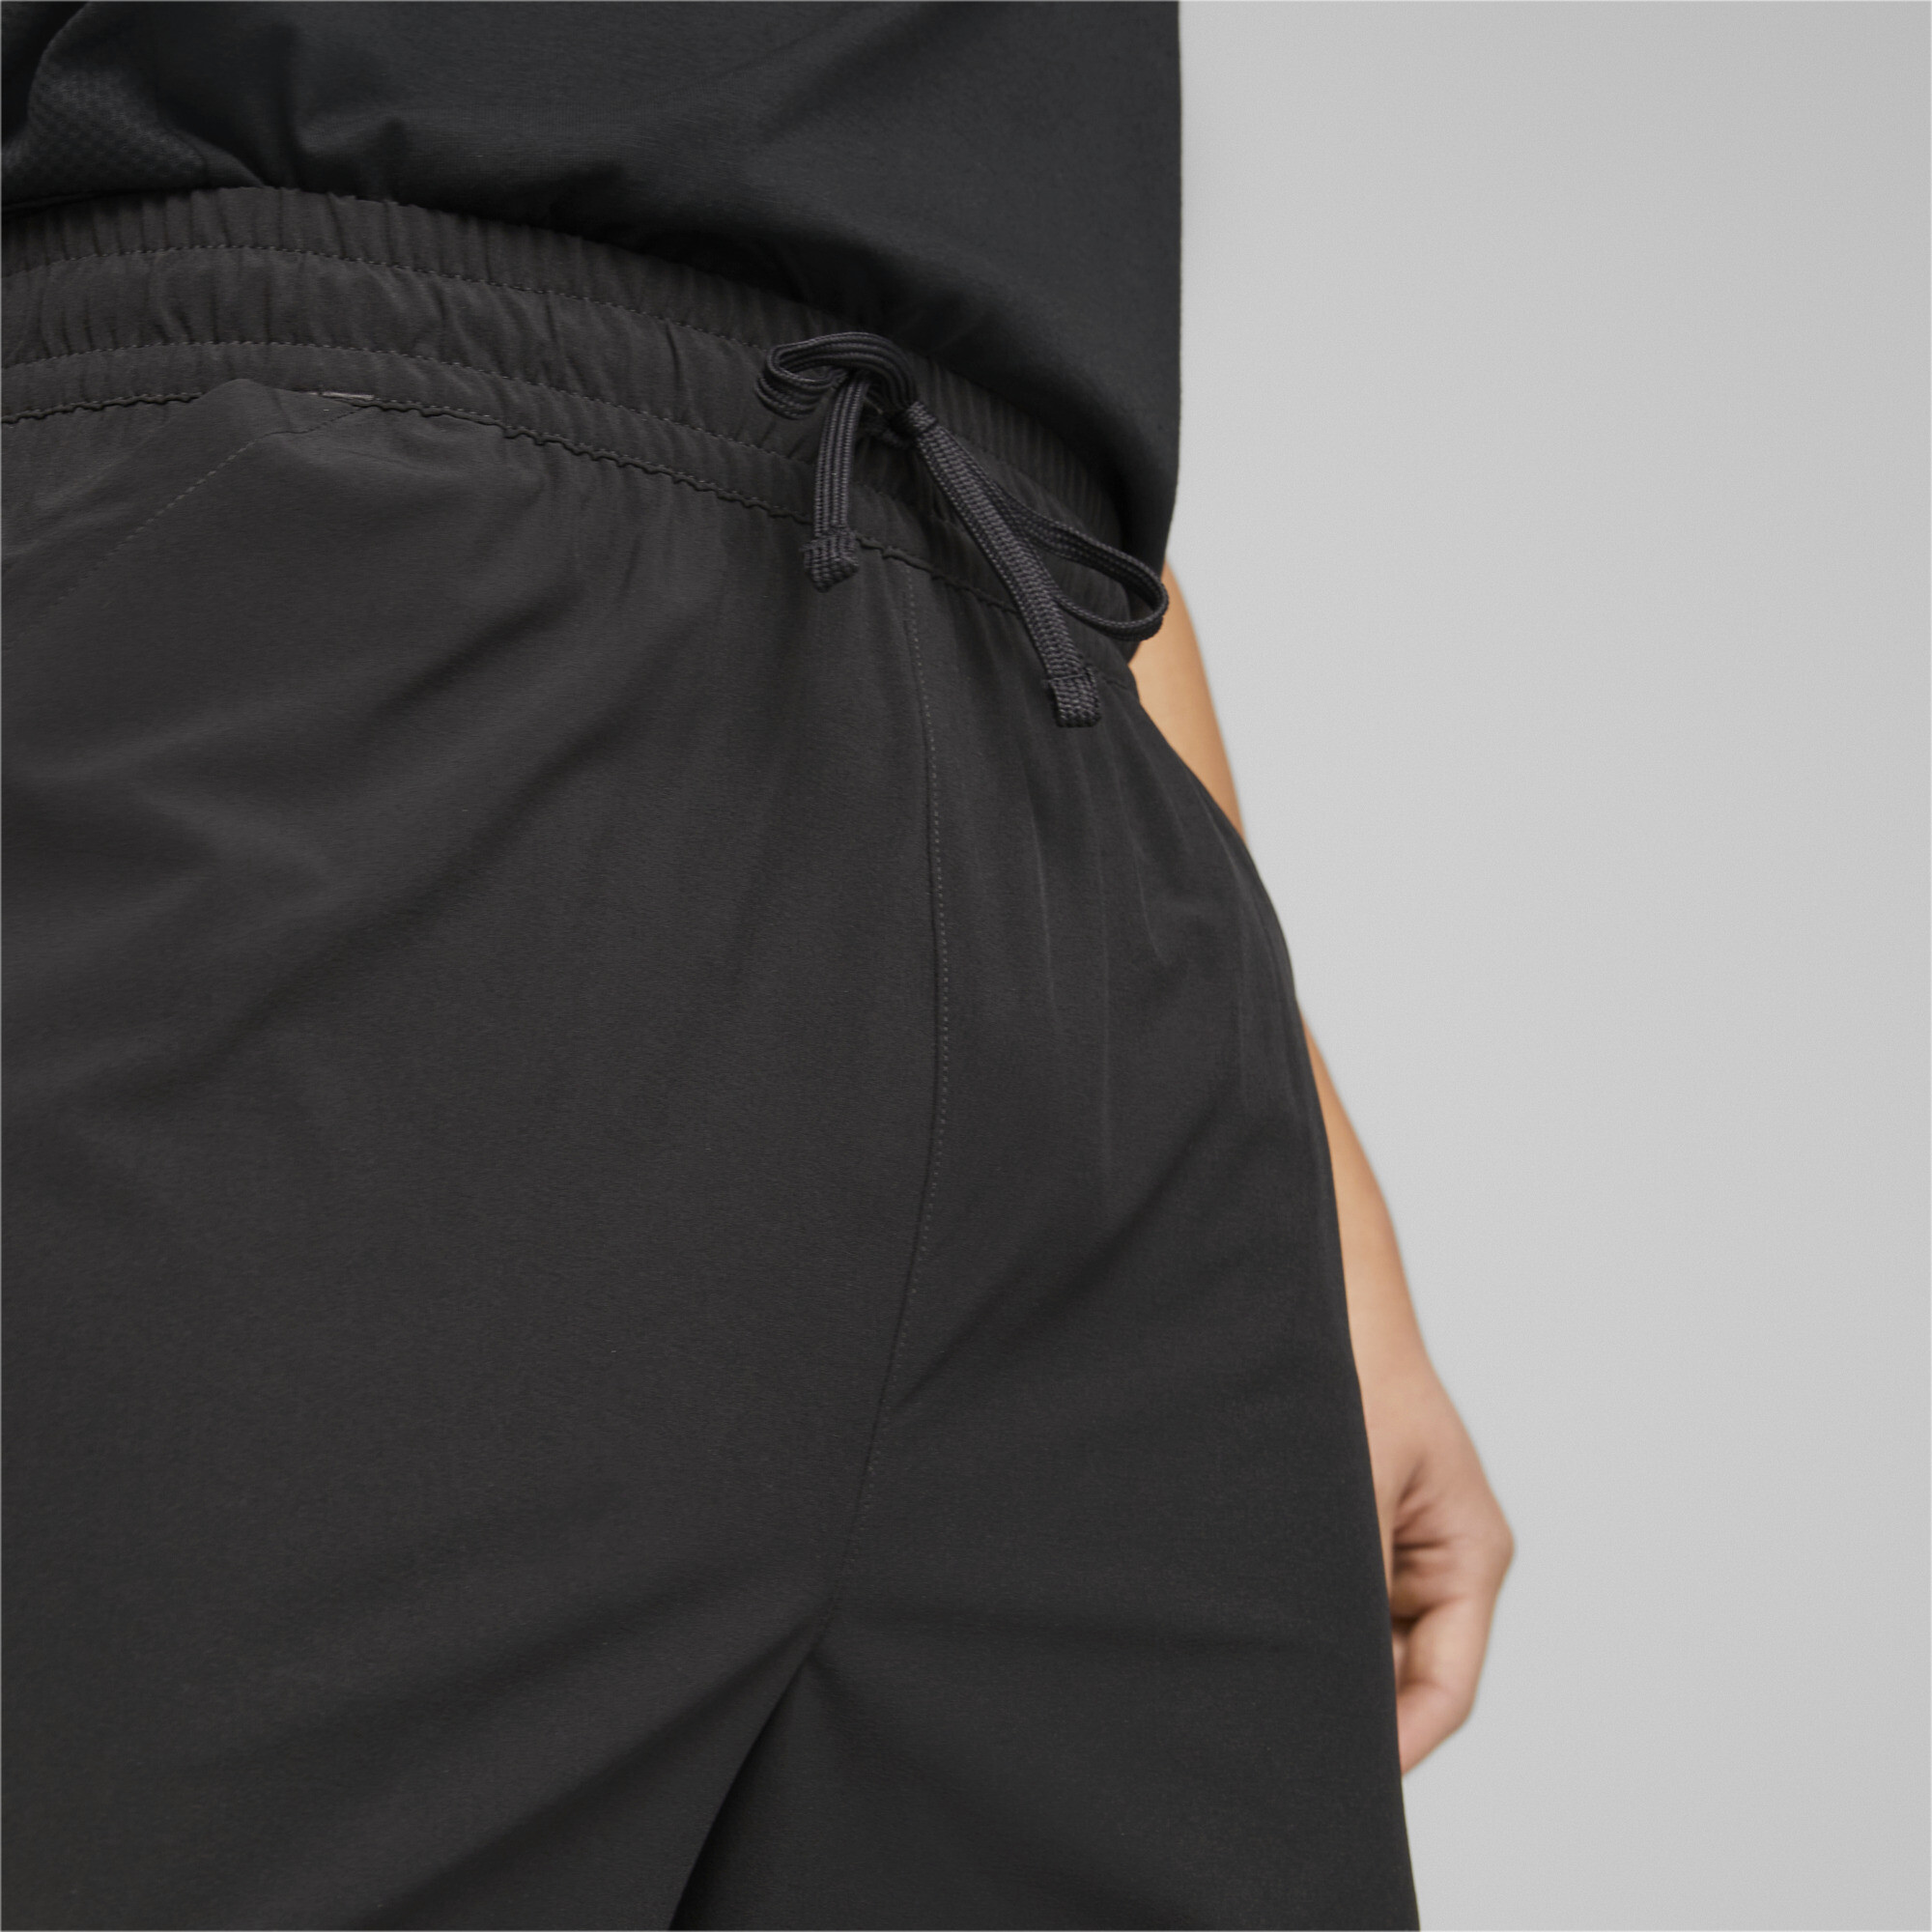 Men's PUMA Fit 7 Stretch Woven Training Shorts Men In Black, Size Medium